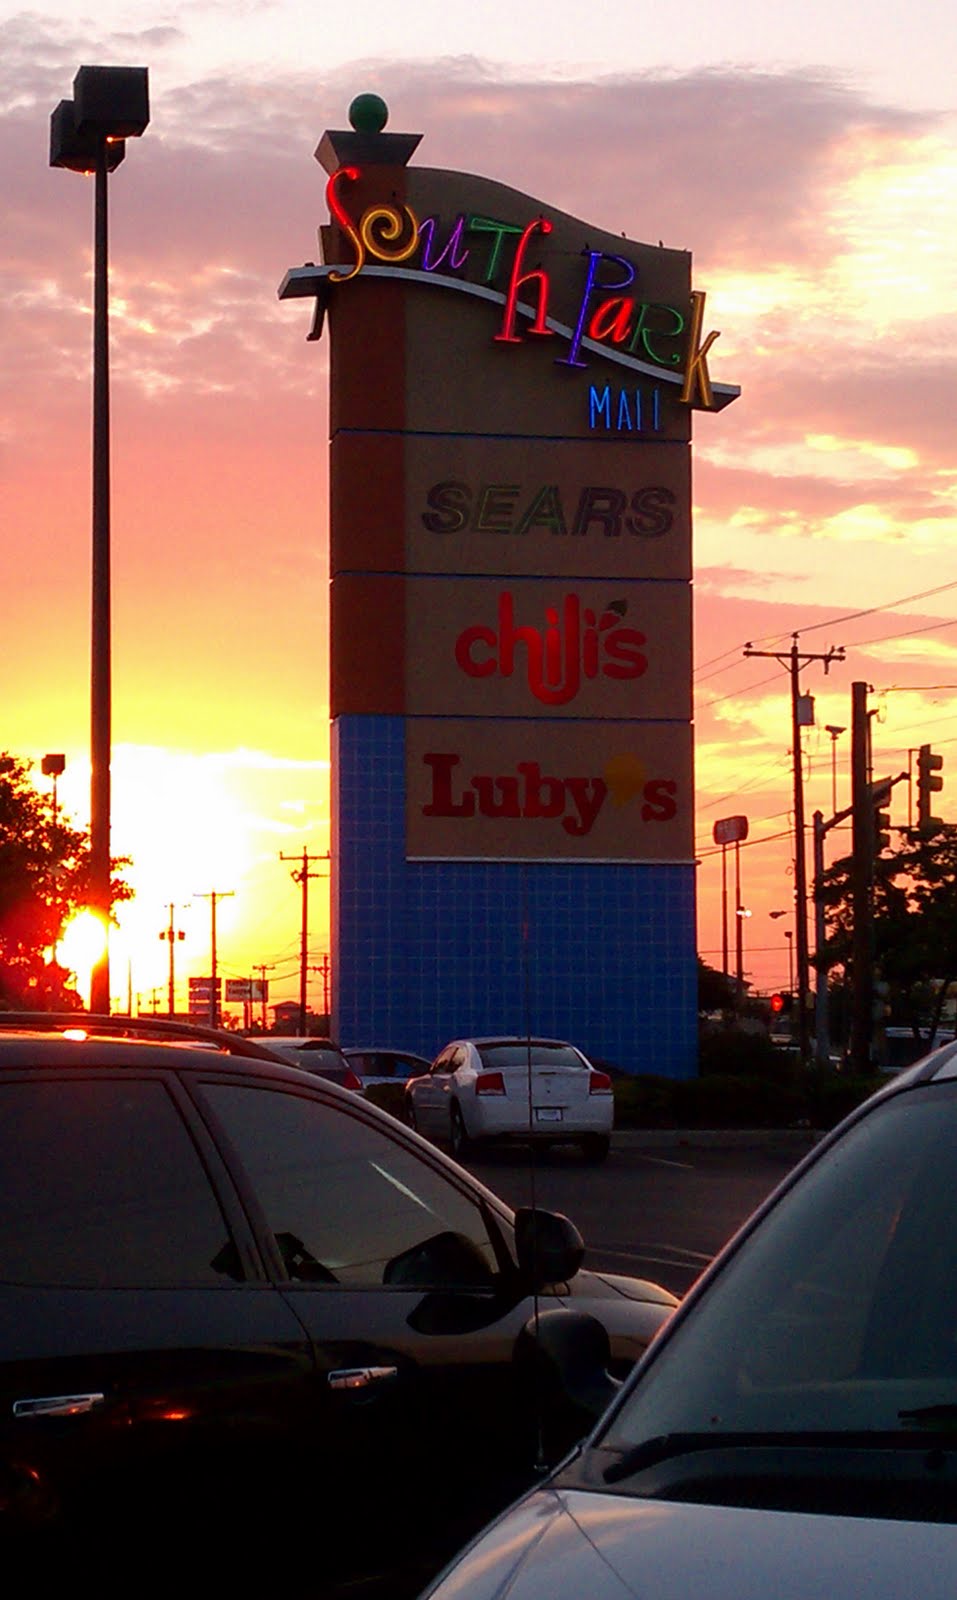 San Antonio – South Park Mall (TX) Location